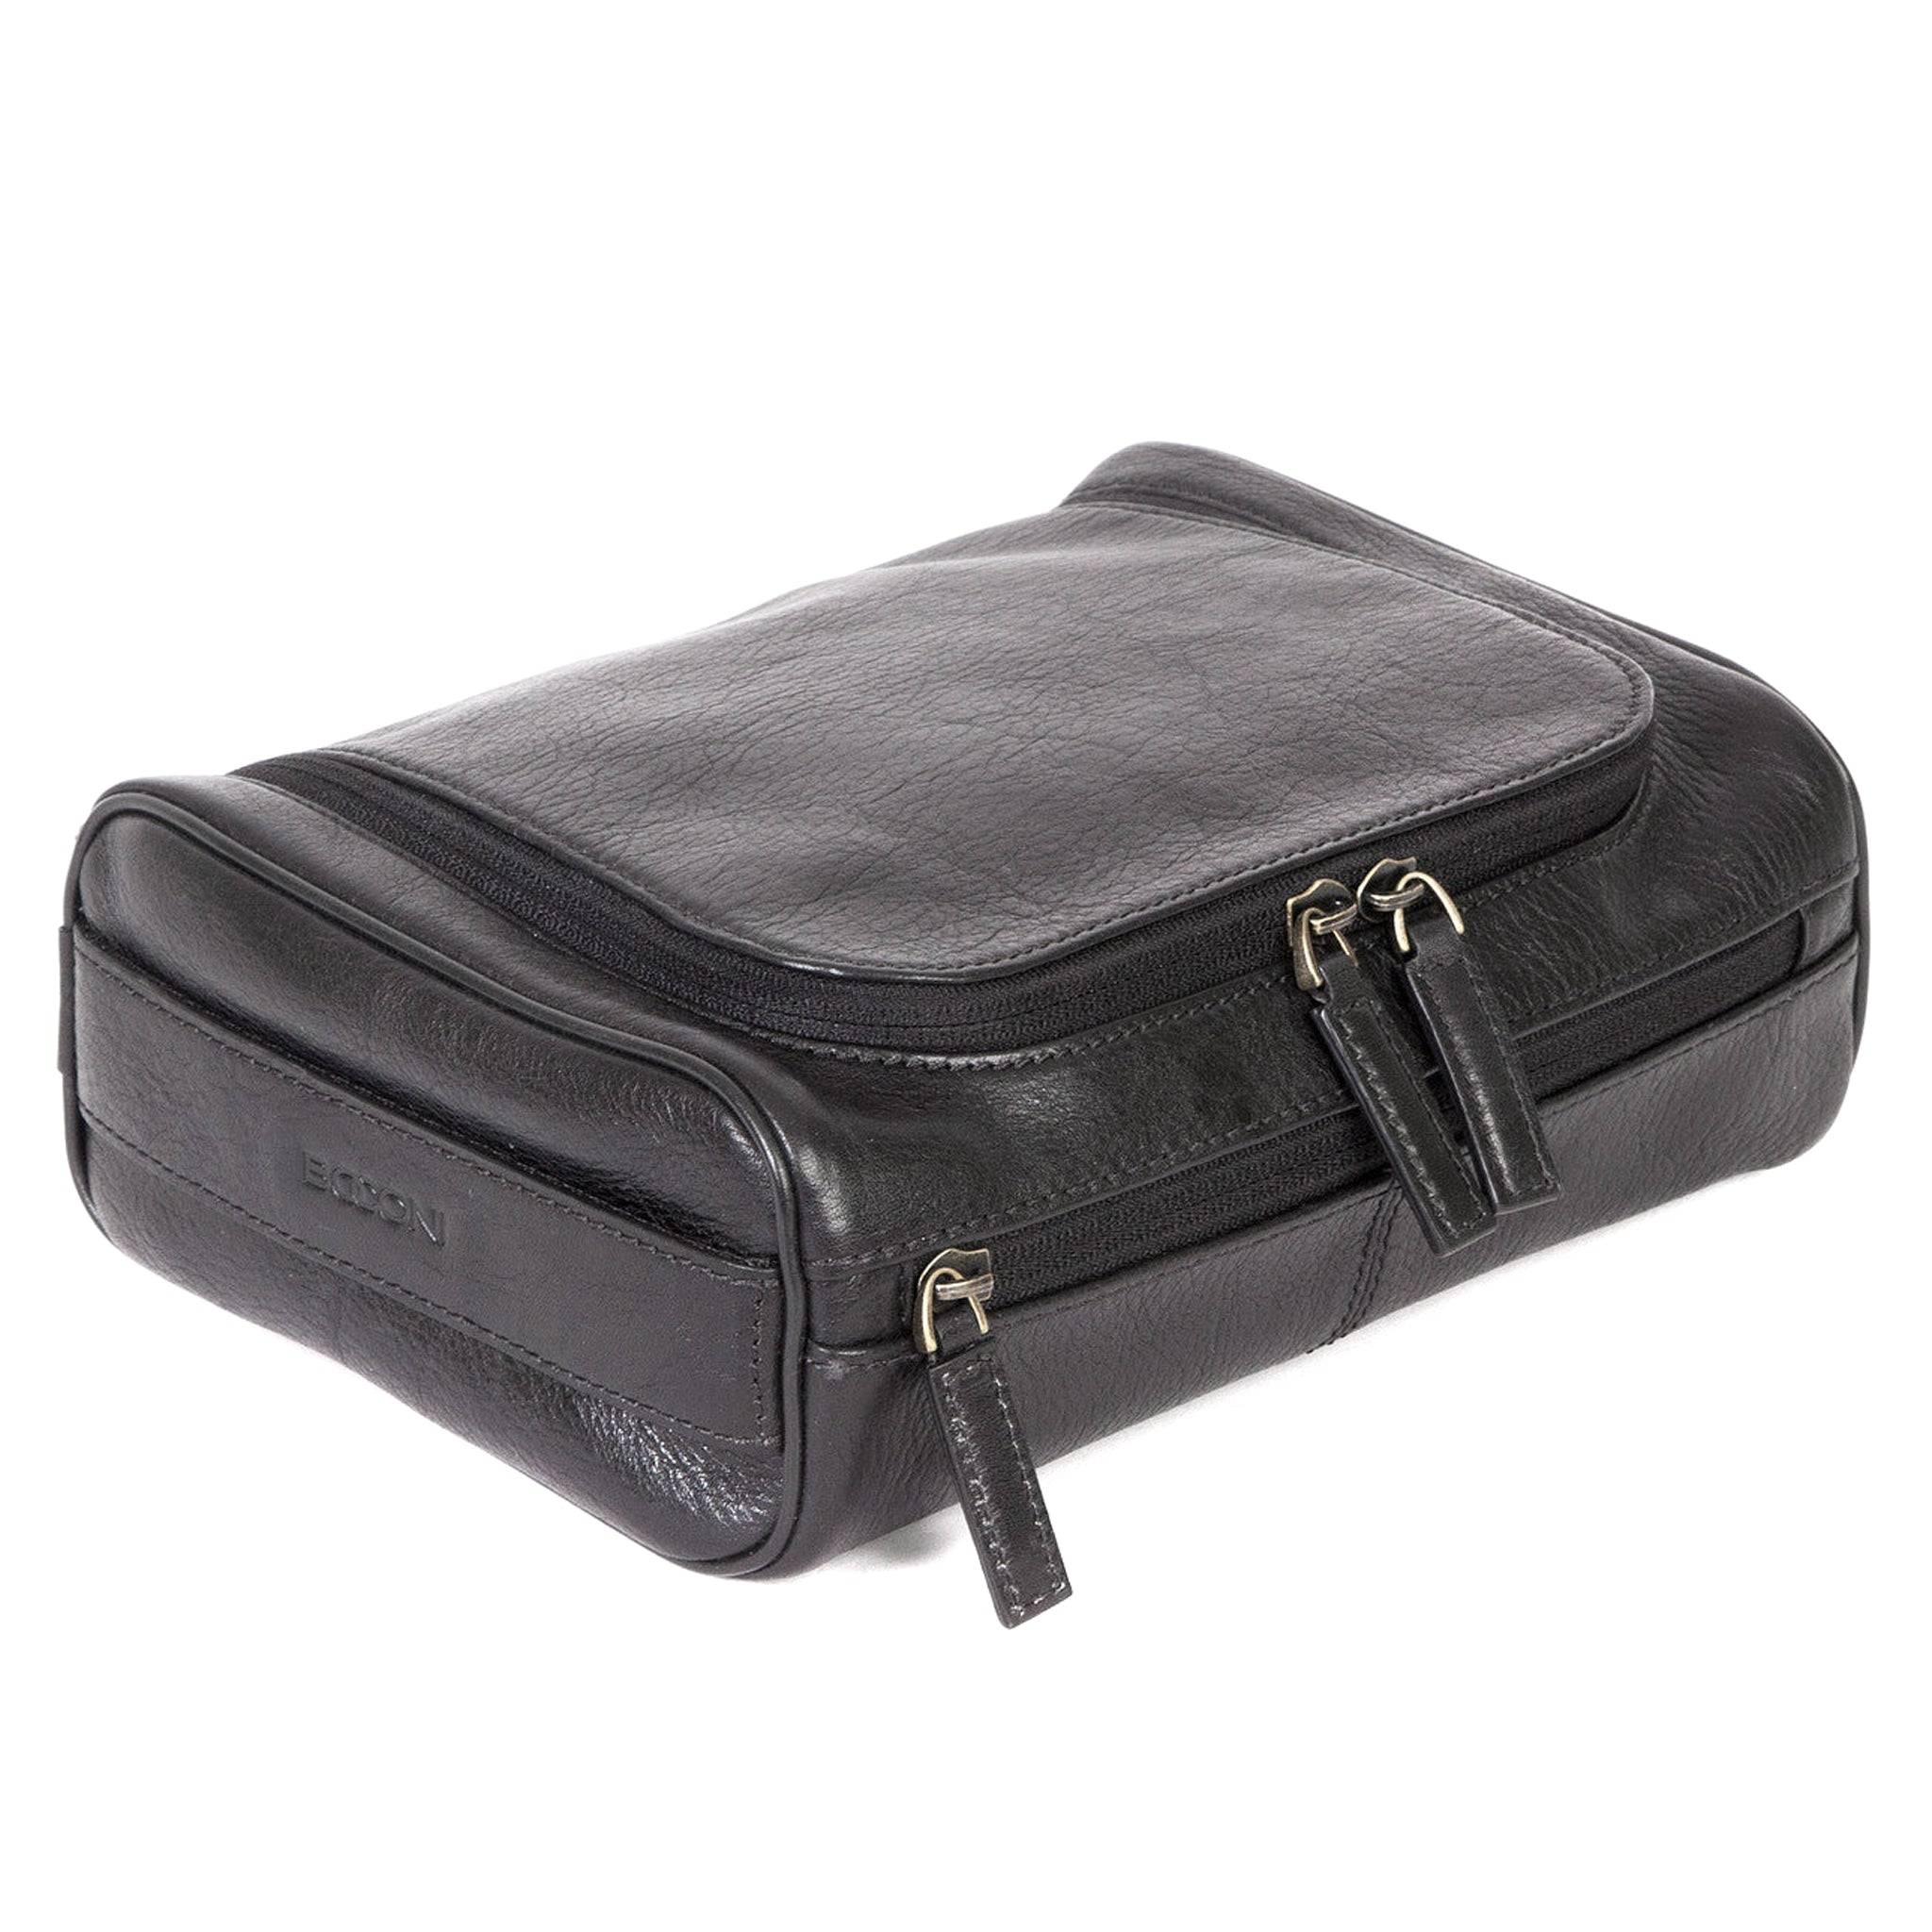 Becker Leather Travel Kit